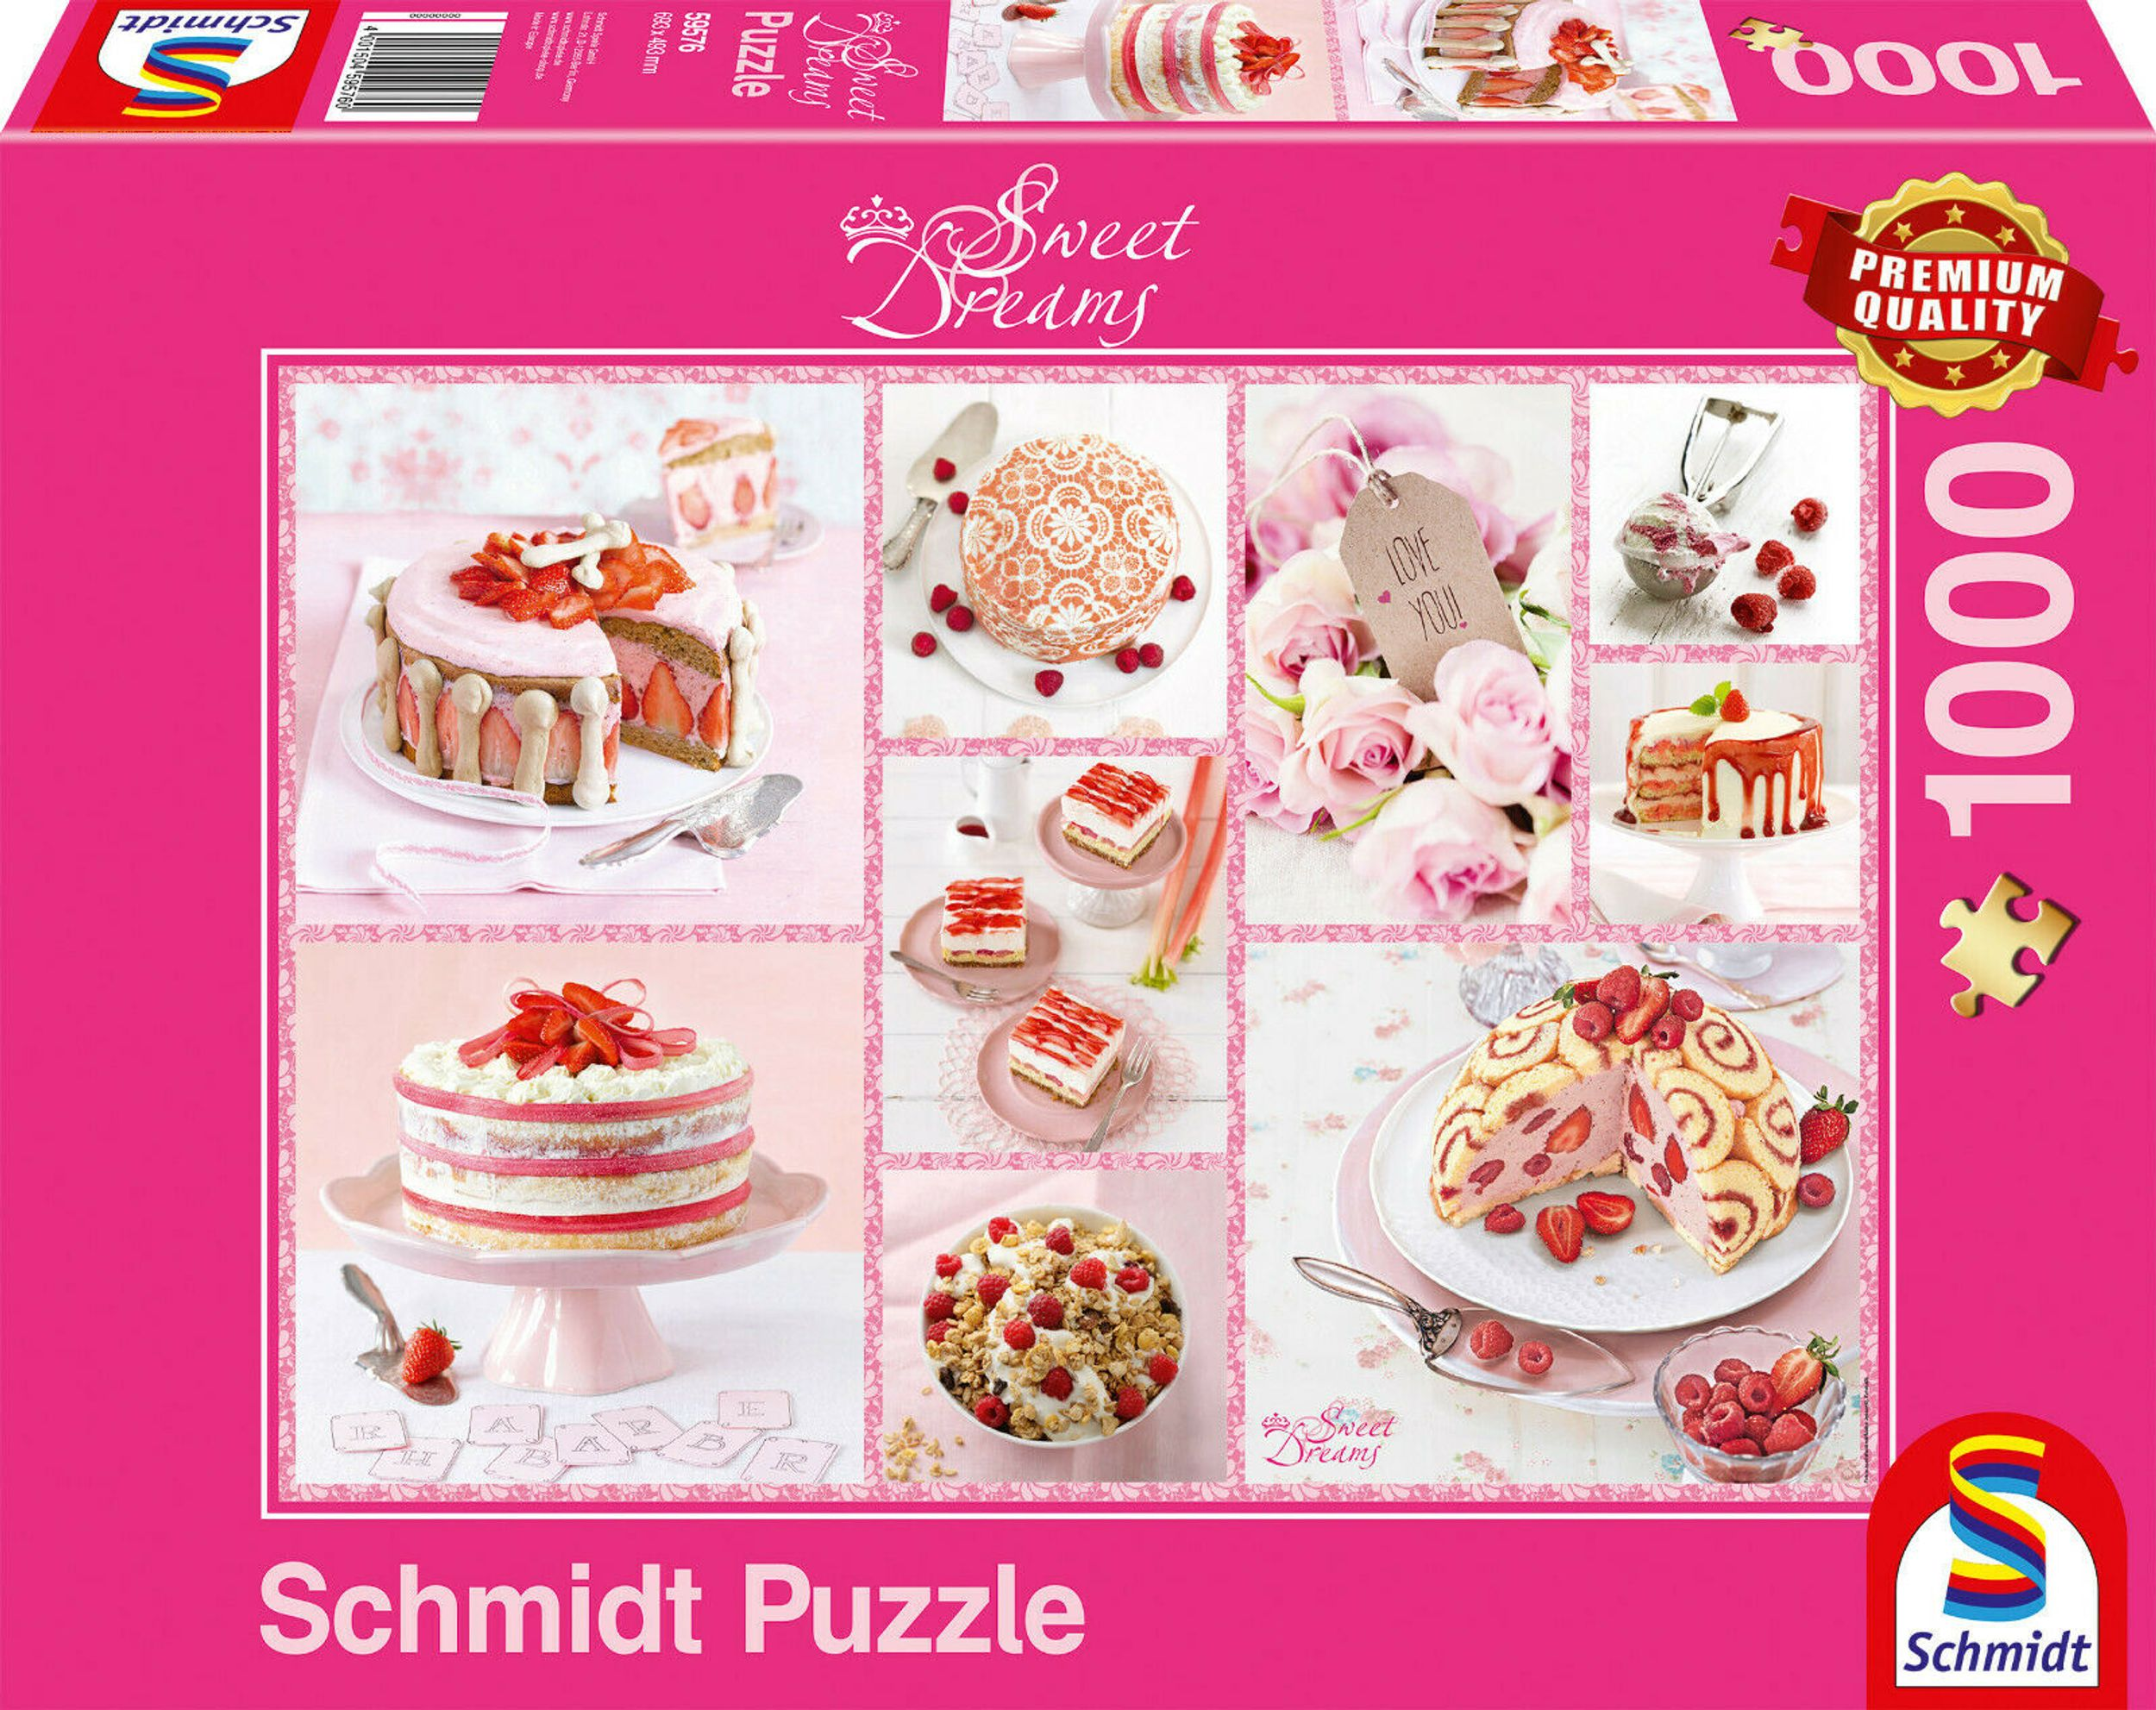 Rosa SCHMIDT Sweet Puzzle SPIELE Tortenglück Dreams